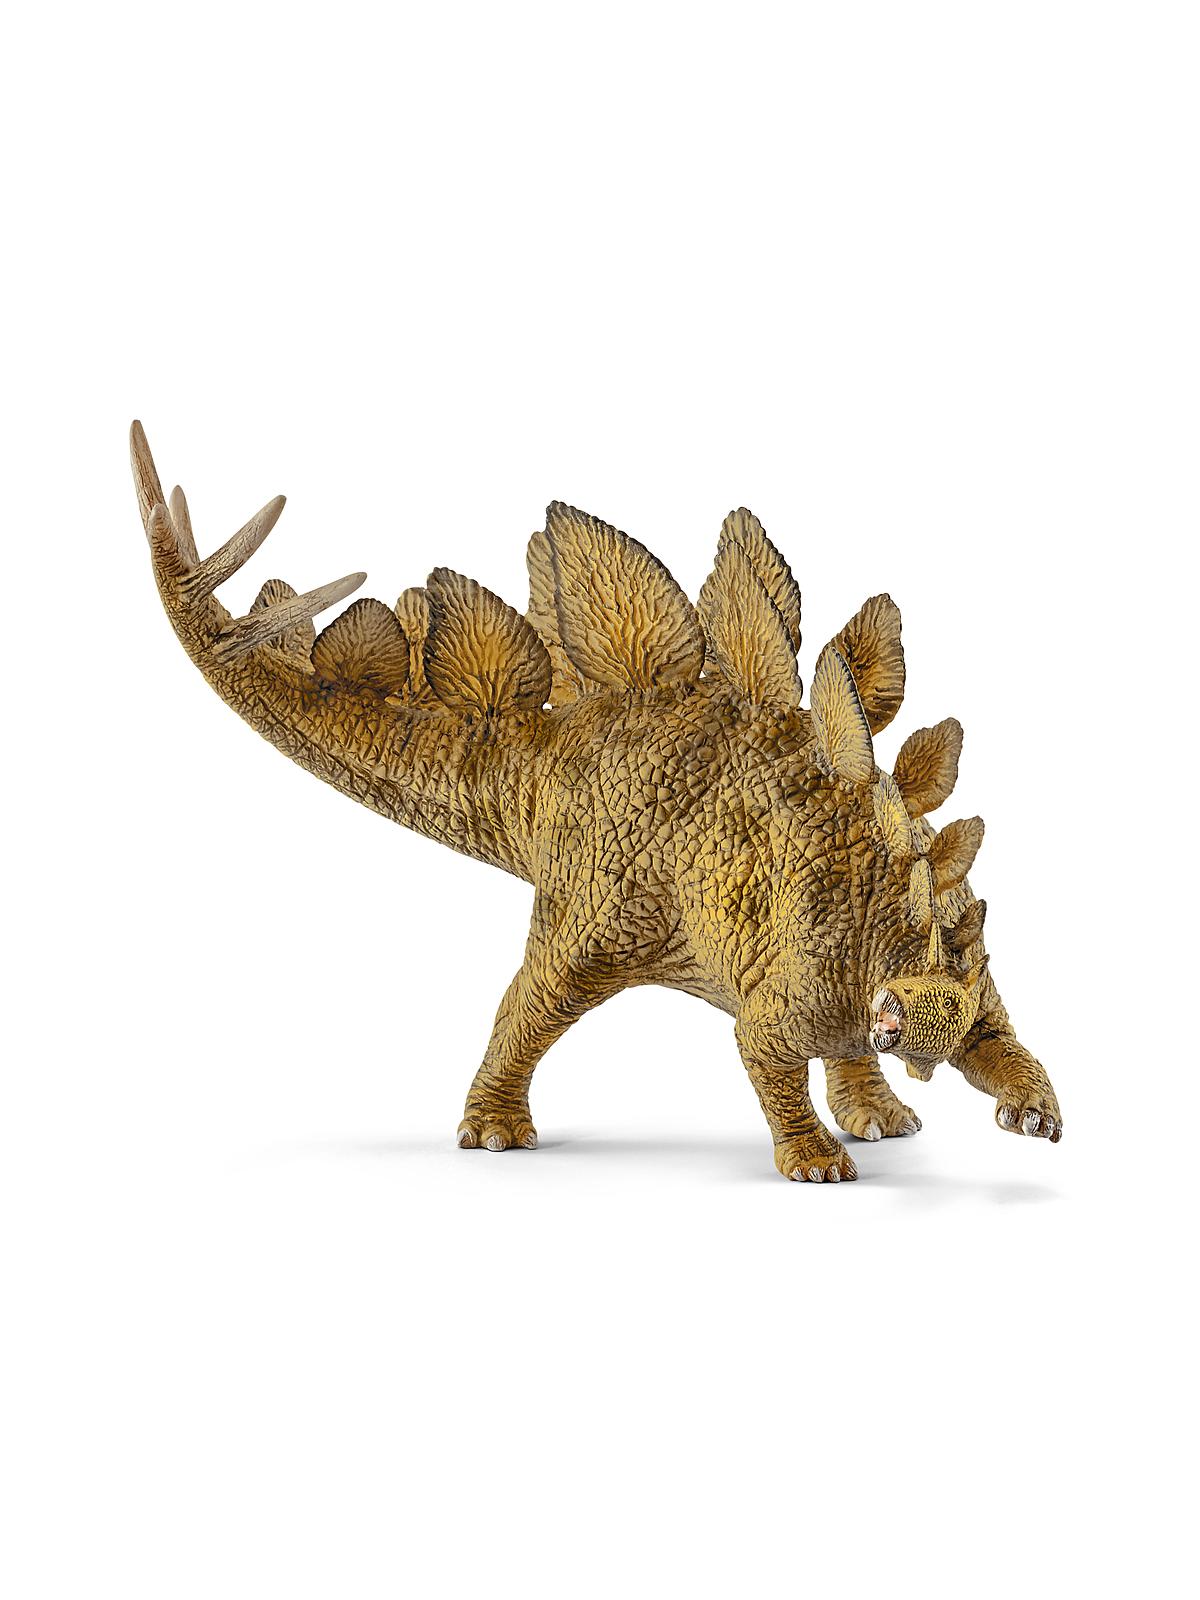 Dinosaurs Stegosaurus